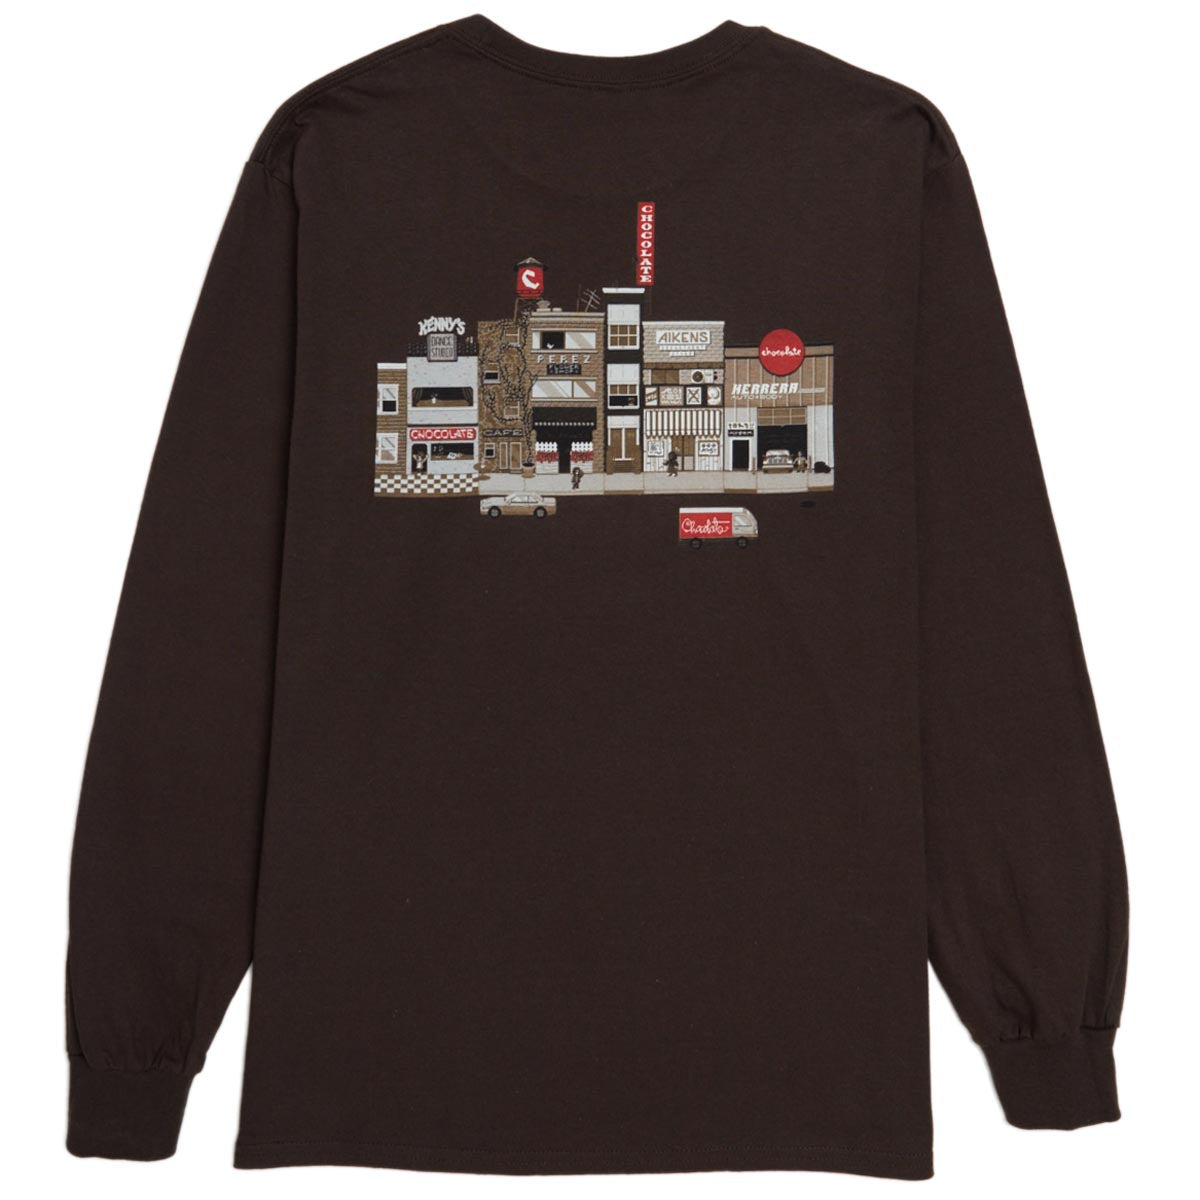 Chocolate Pixel City Long Sleeve T-Shirt - Brown image 1